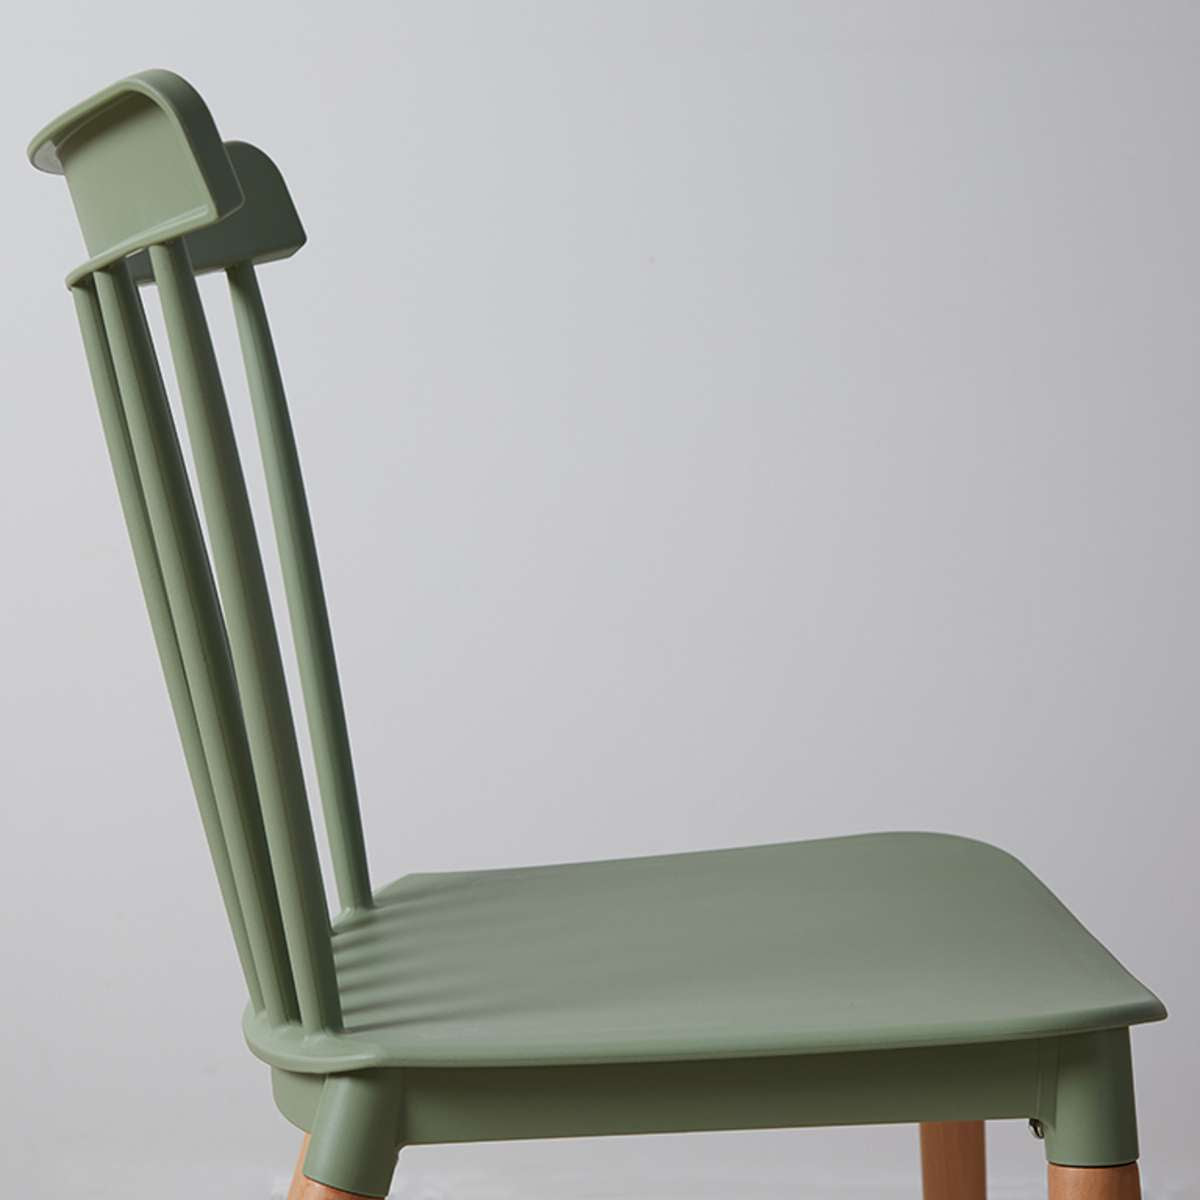 Frida Dining Chair - Set of 2 - Sage Green